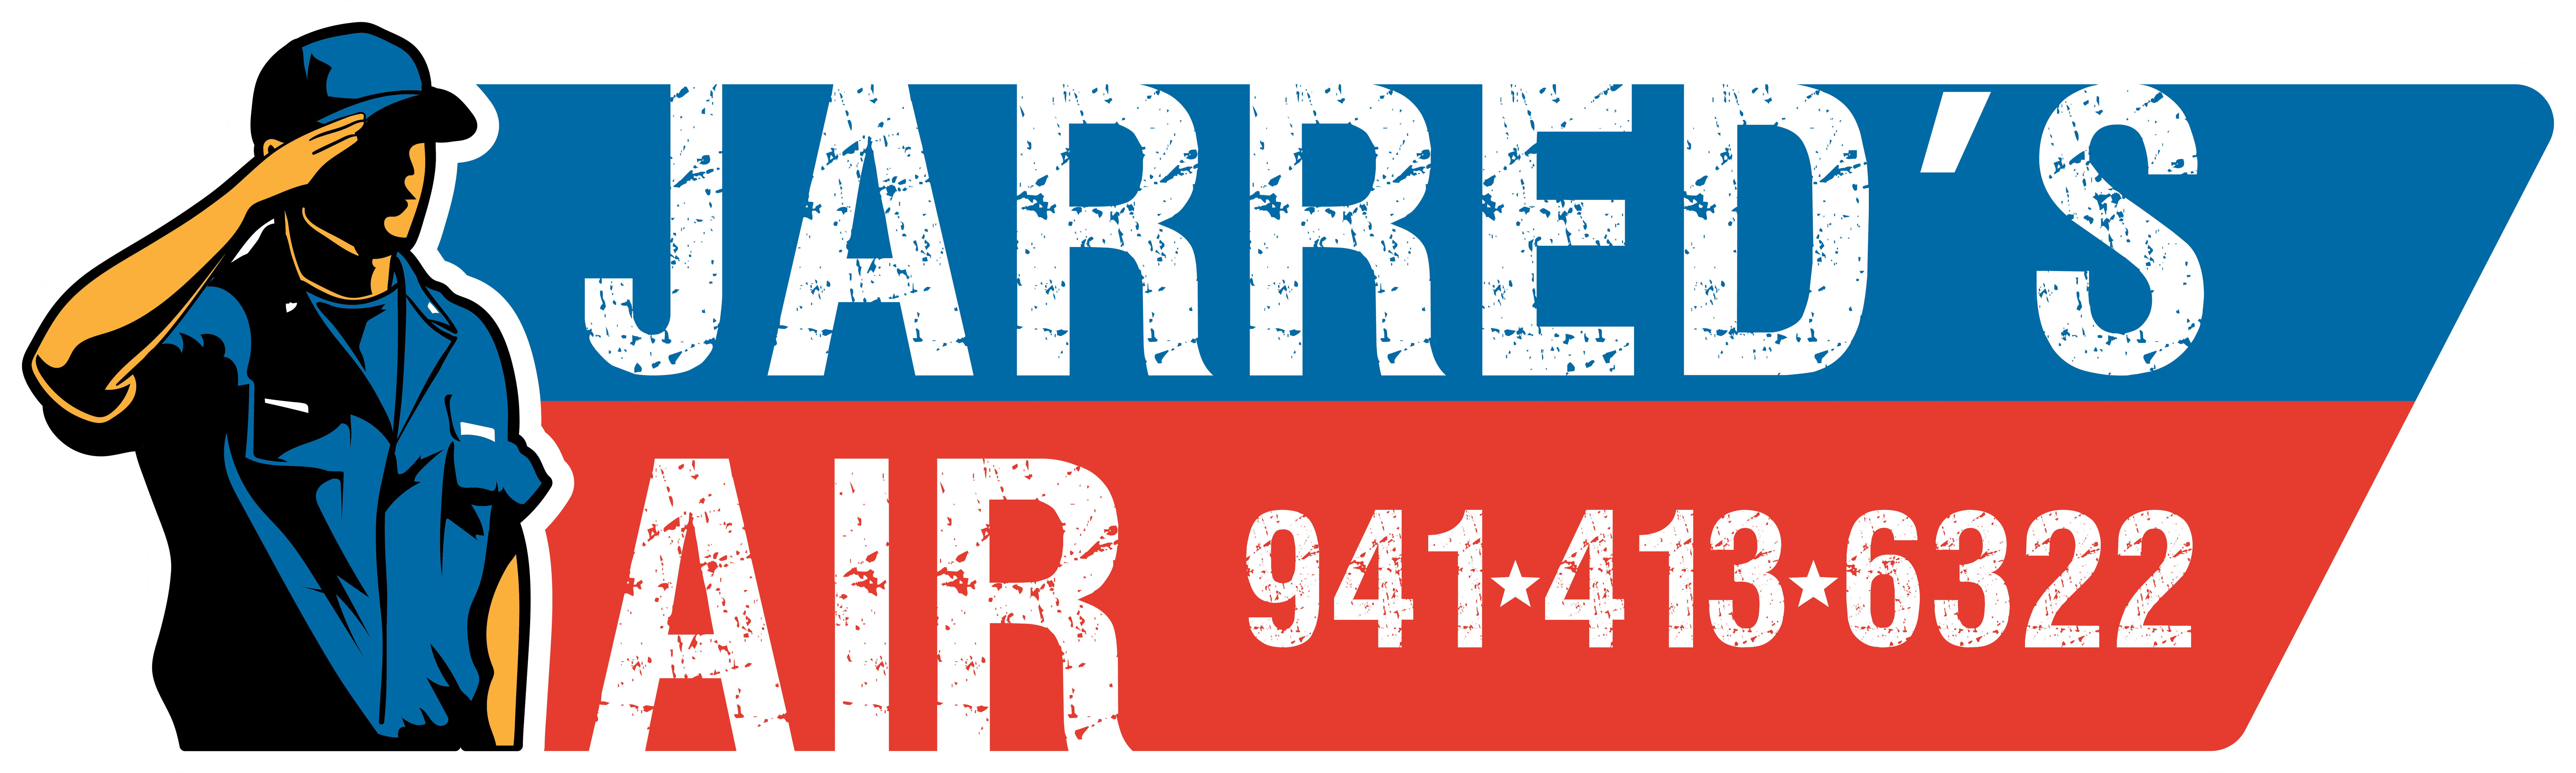 jarred's air logo new grunge 1